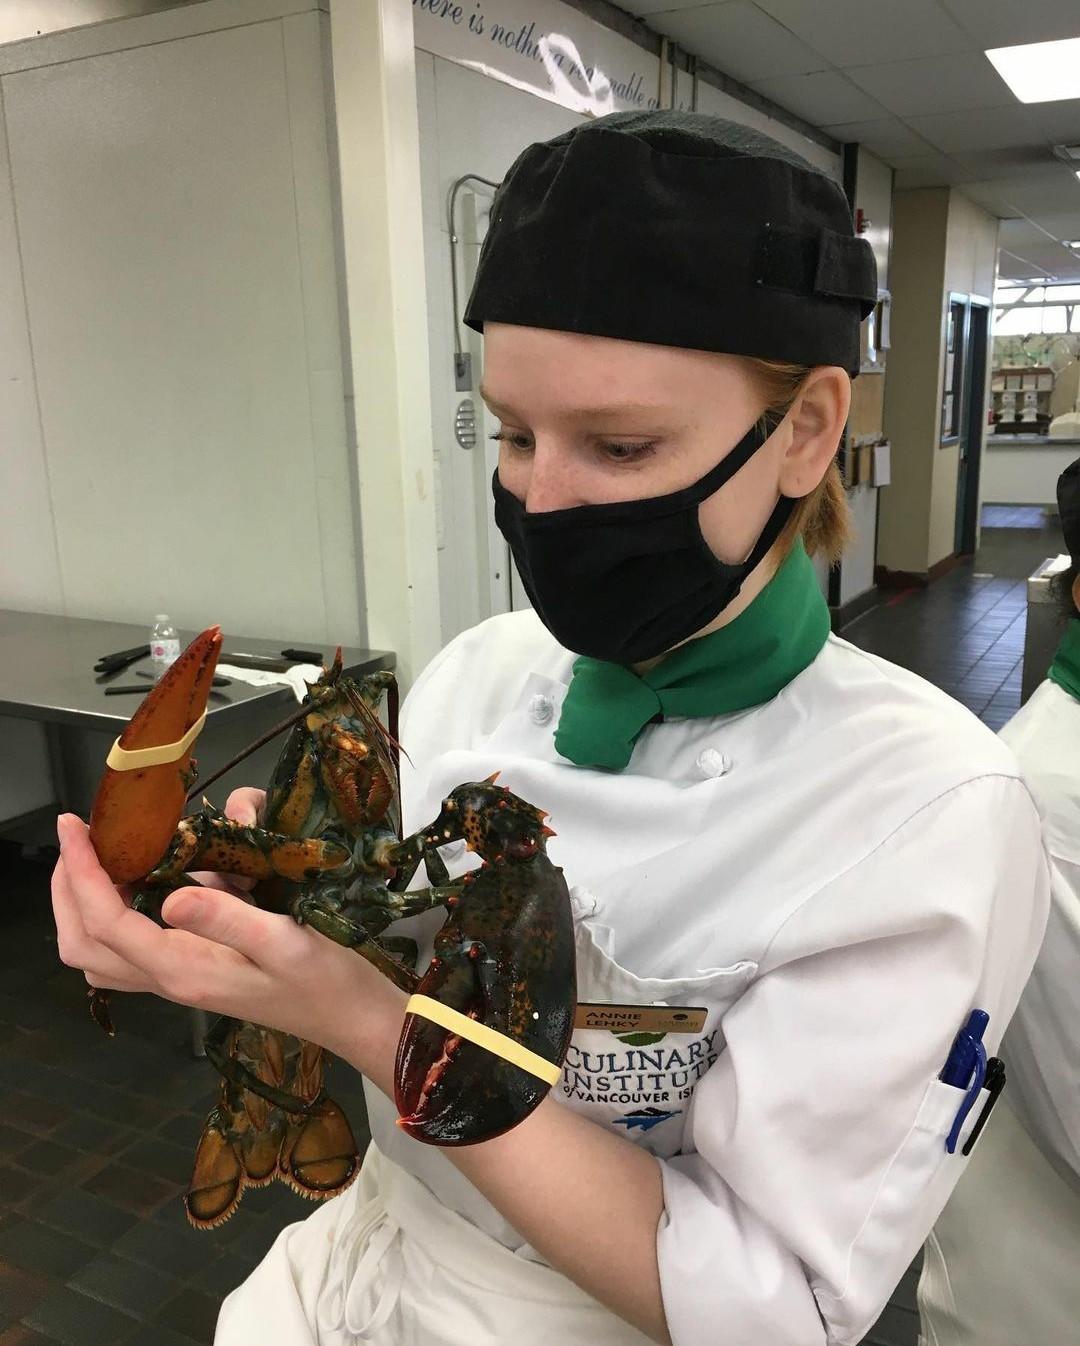 Girl wearing VIU Culinary Arts uniform holding a lobster